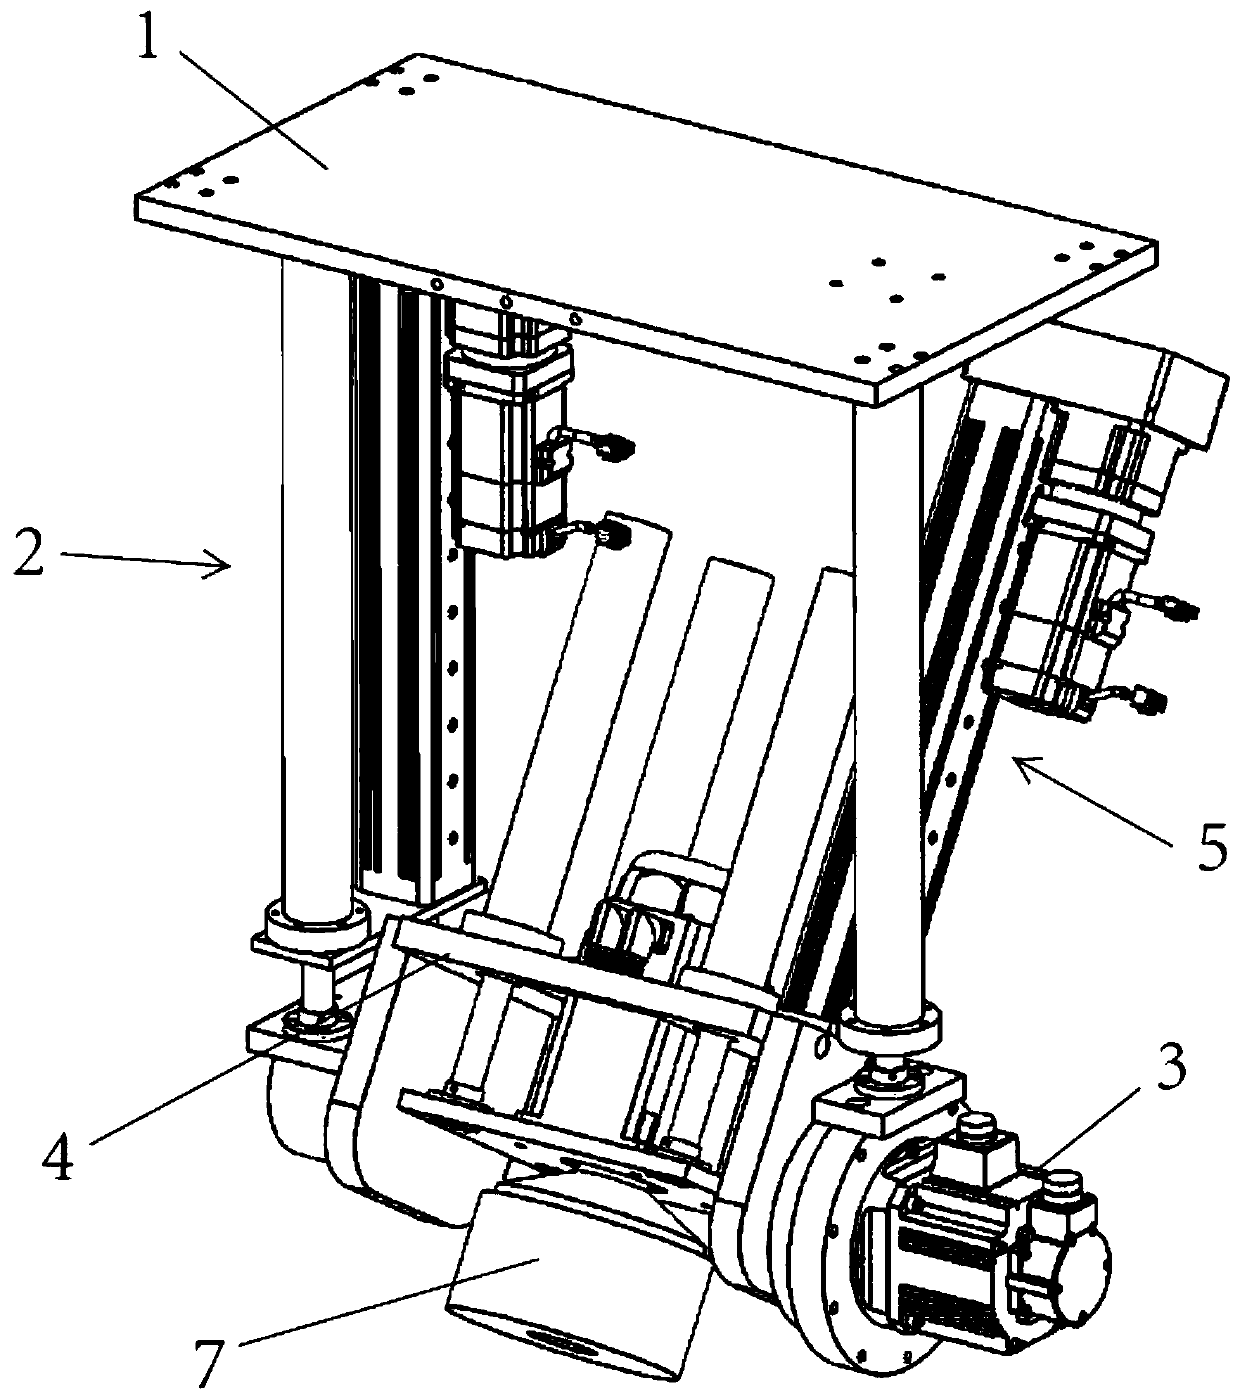 Rail grinding device